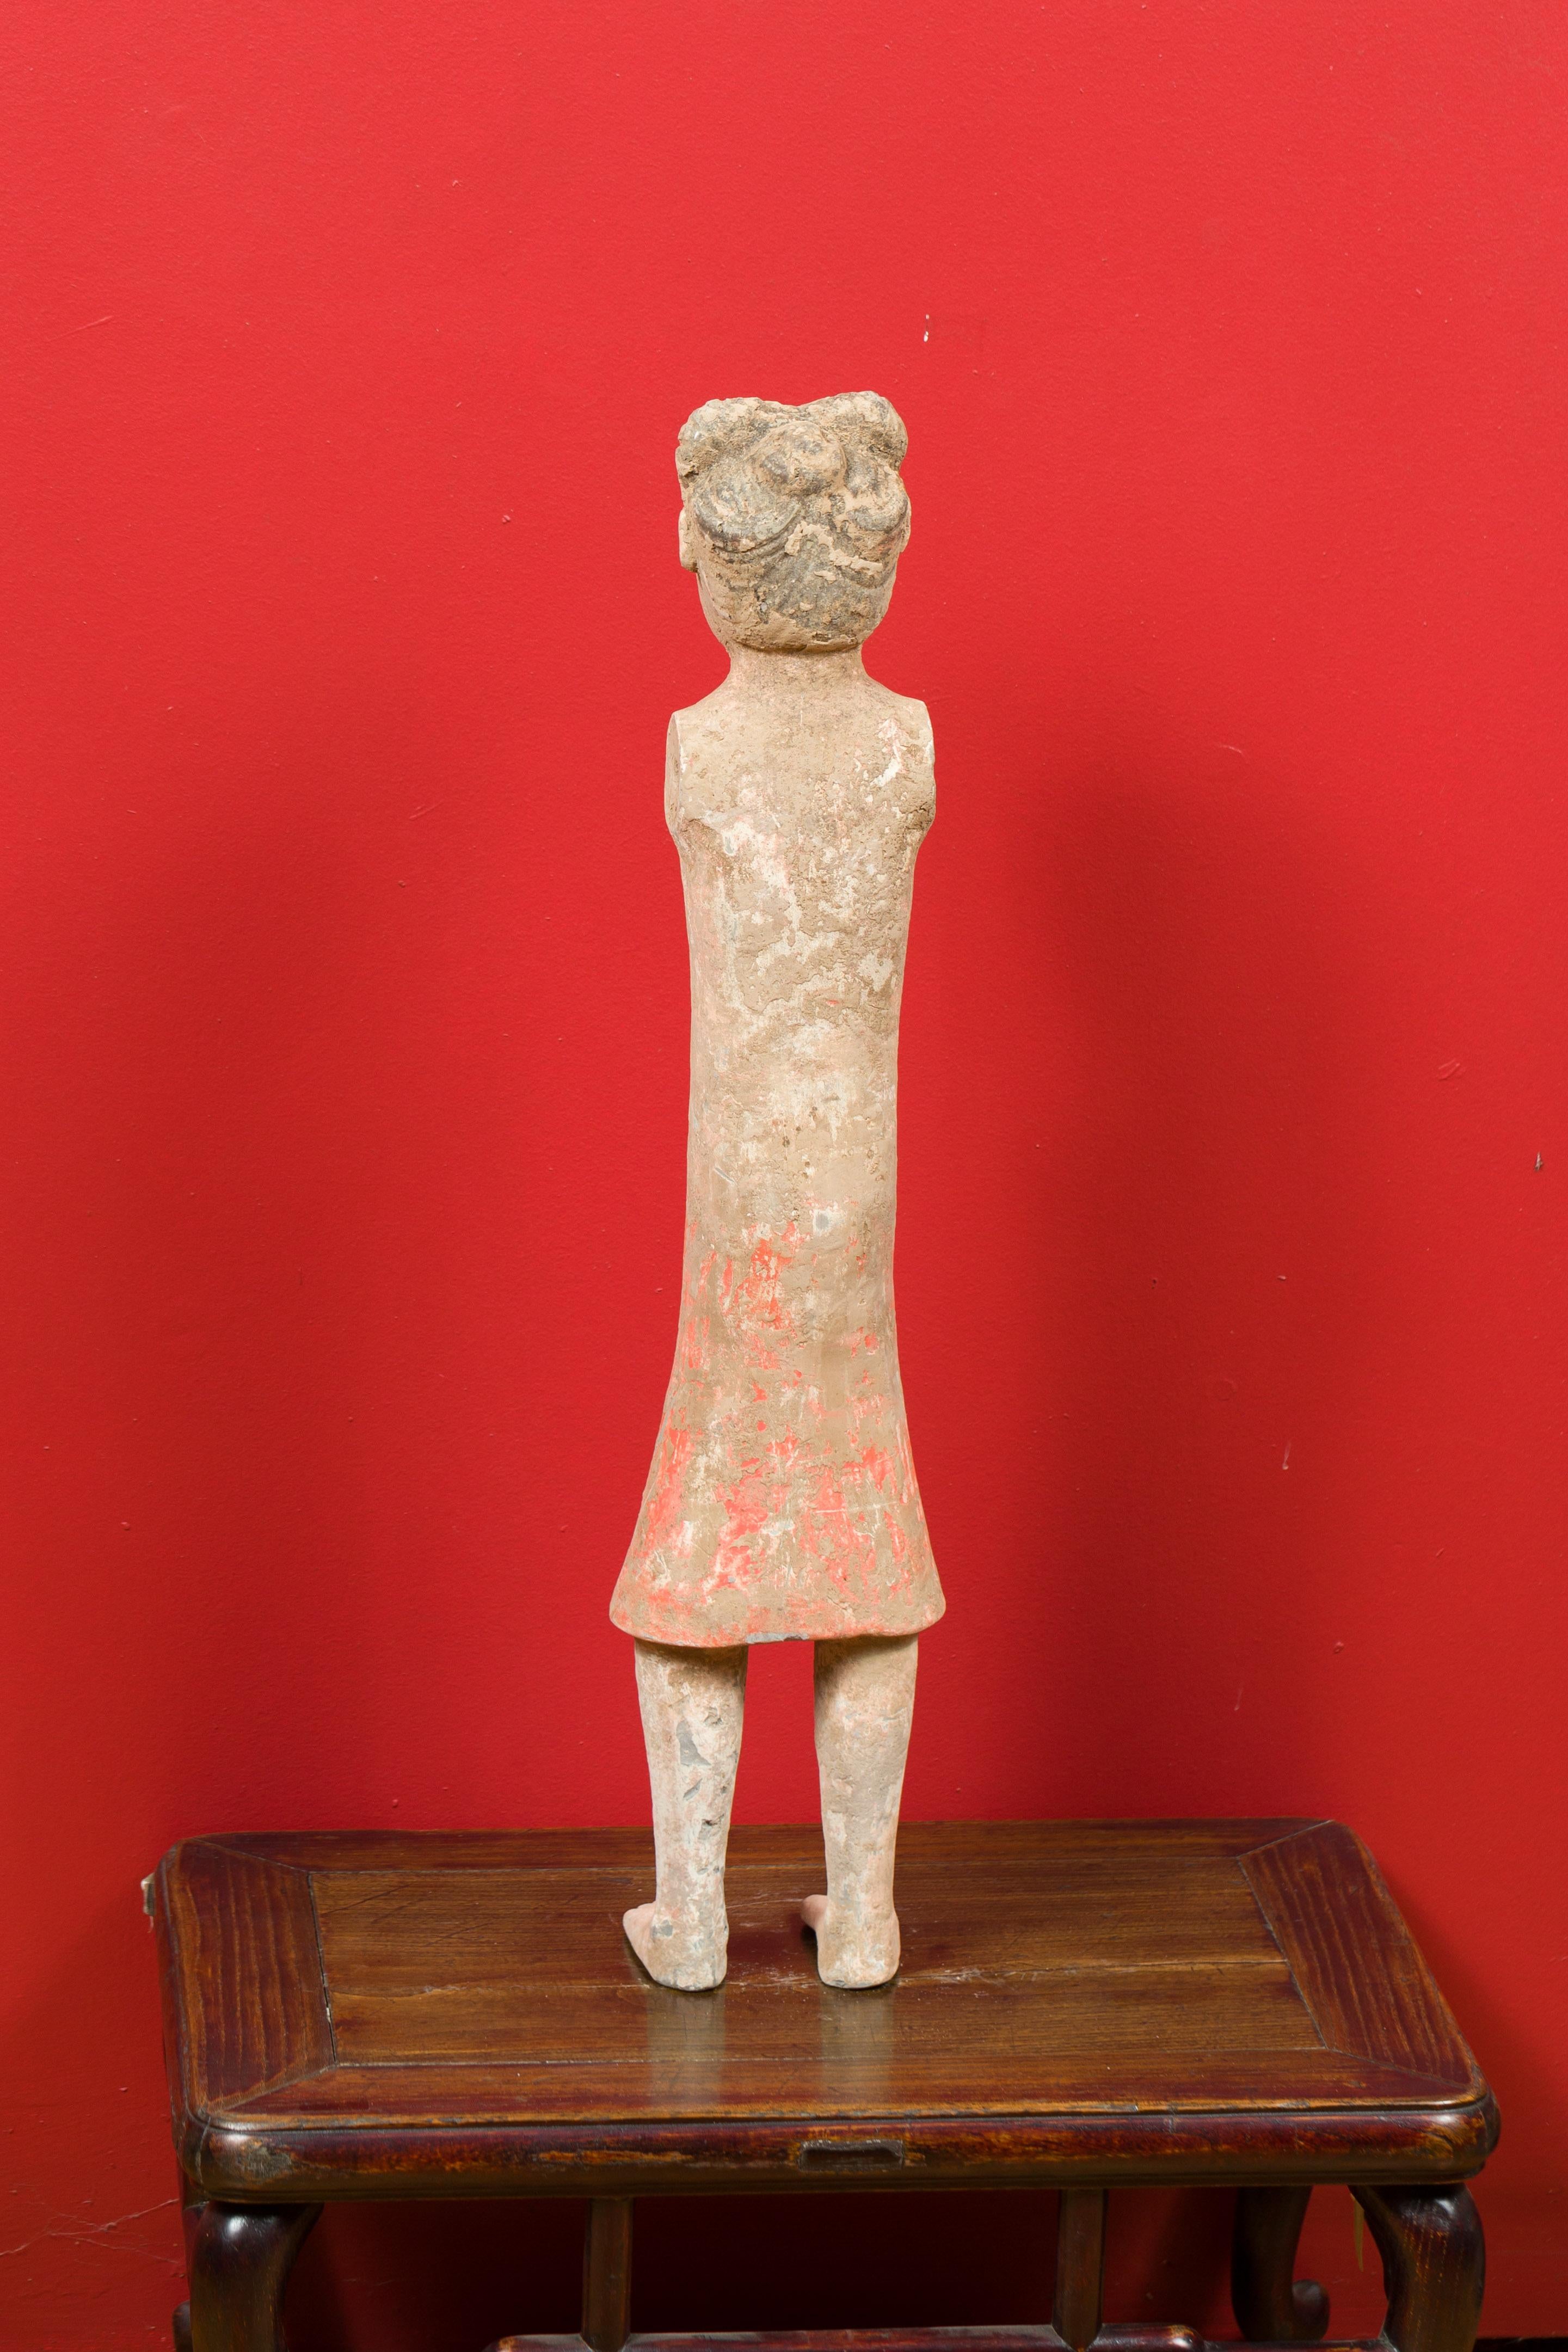 Chinese 206 BC-24 AD Western Han Dynasty Figurine with Original Polychromy 7